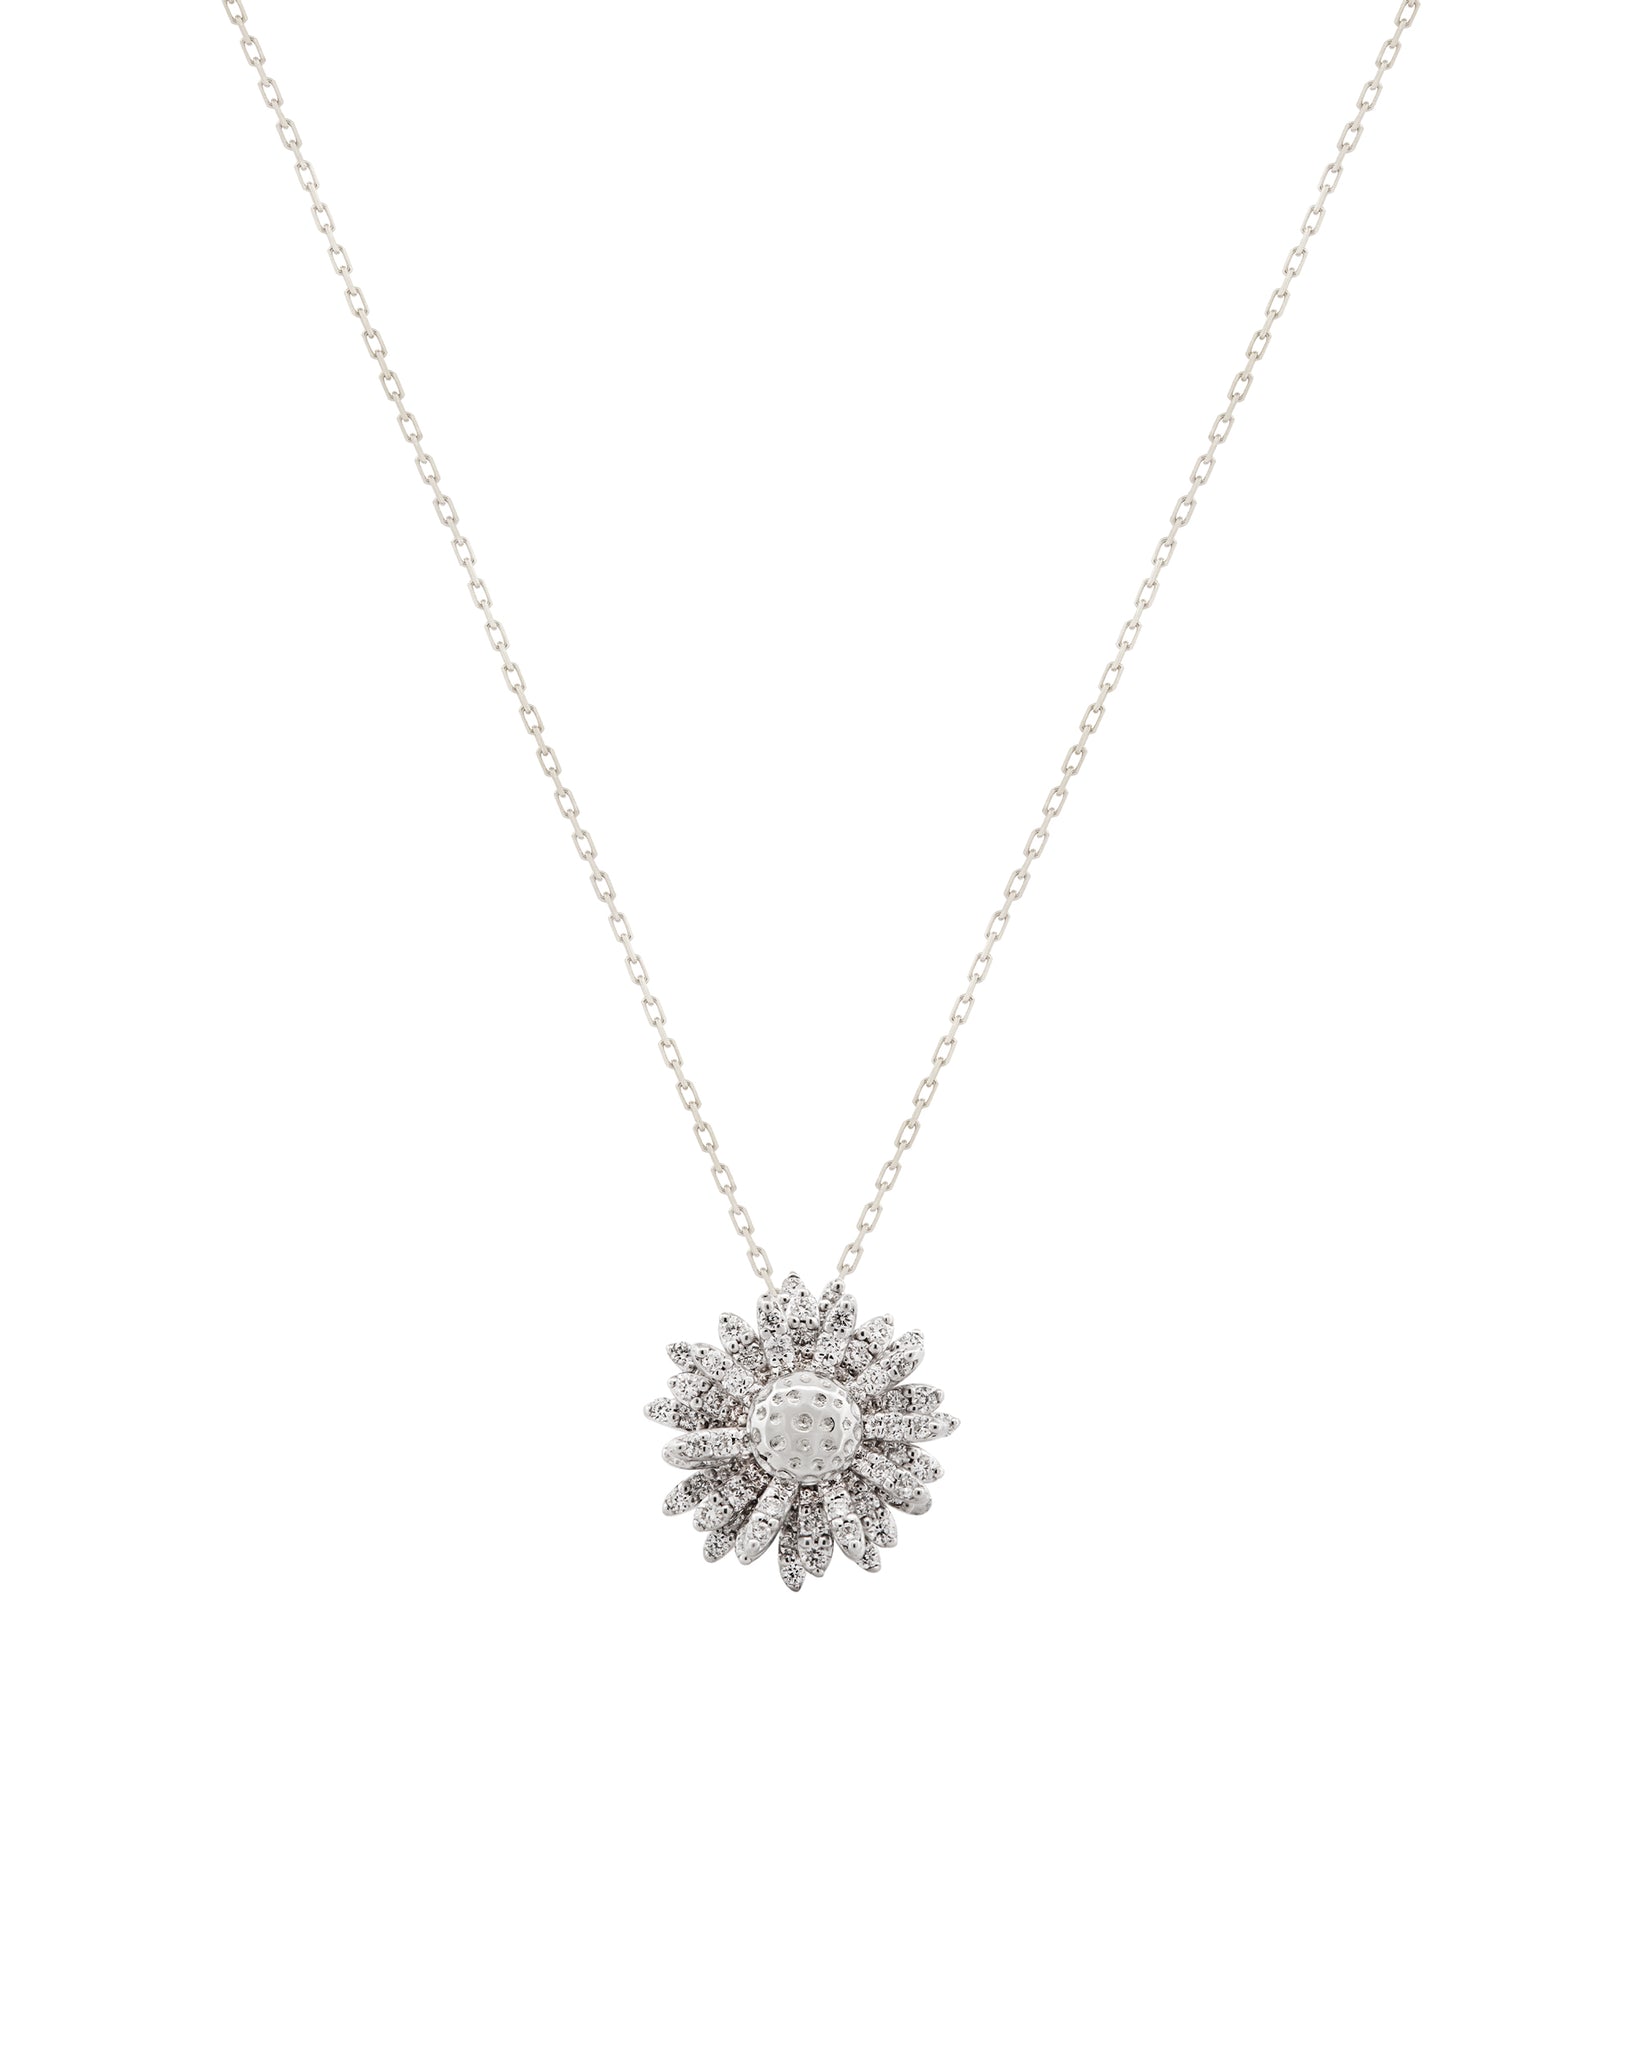 Daisy Necklace, Rose Gold Flower Necklace, Dainty daisy jewelry, Cz Diamond  necklace